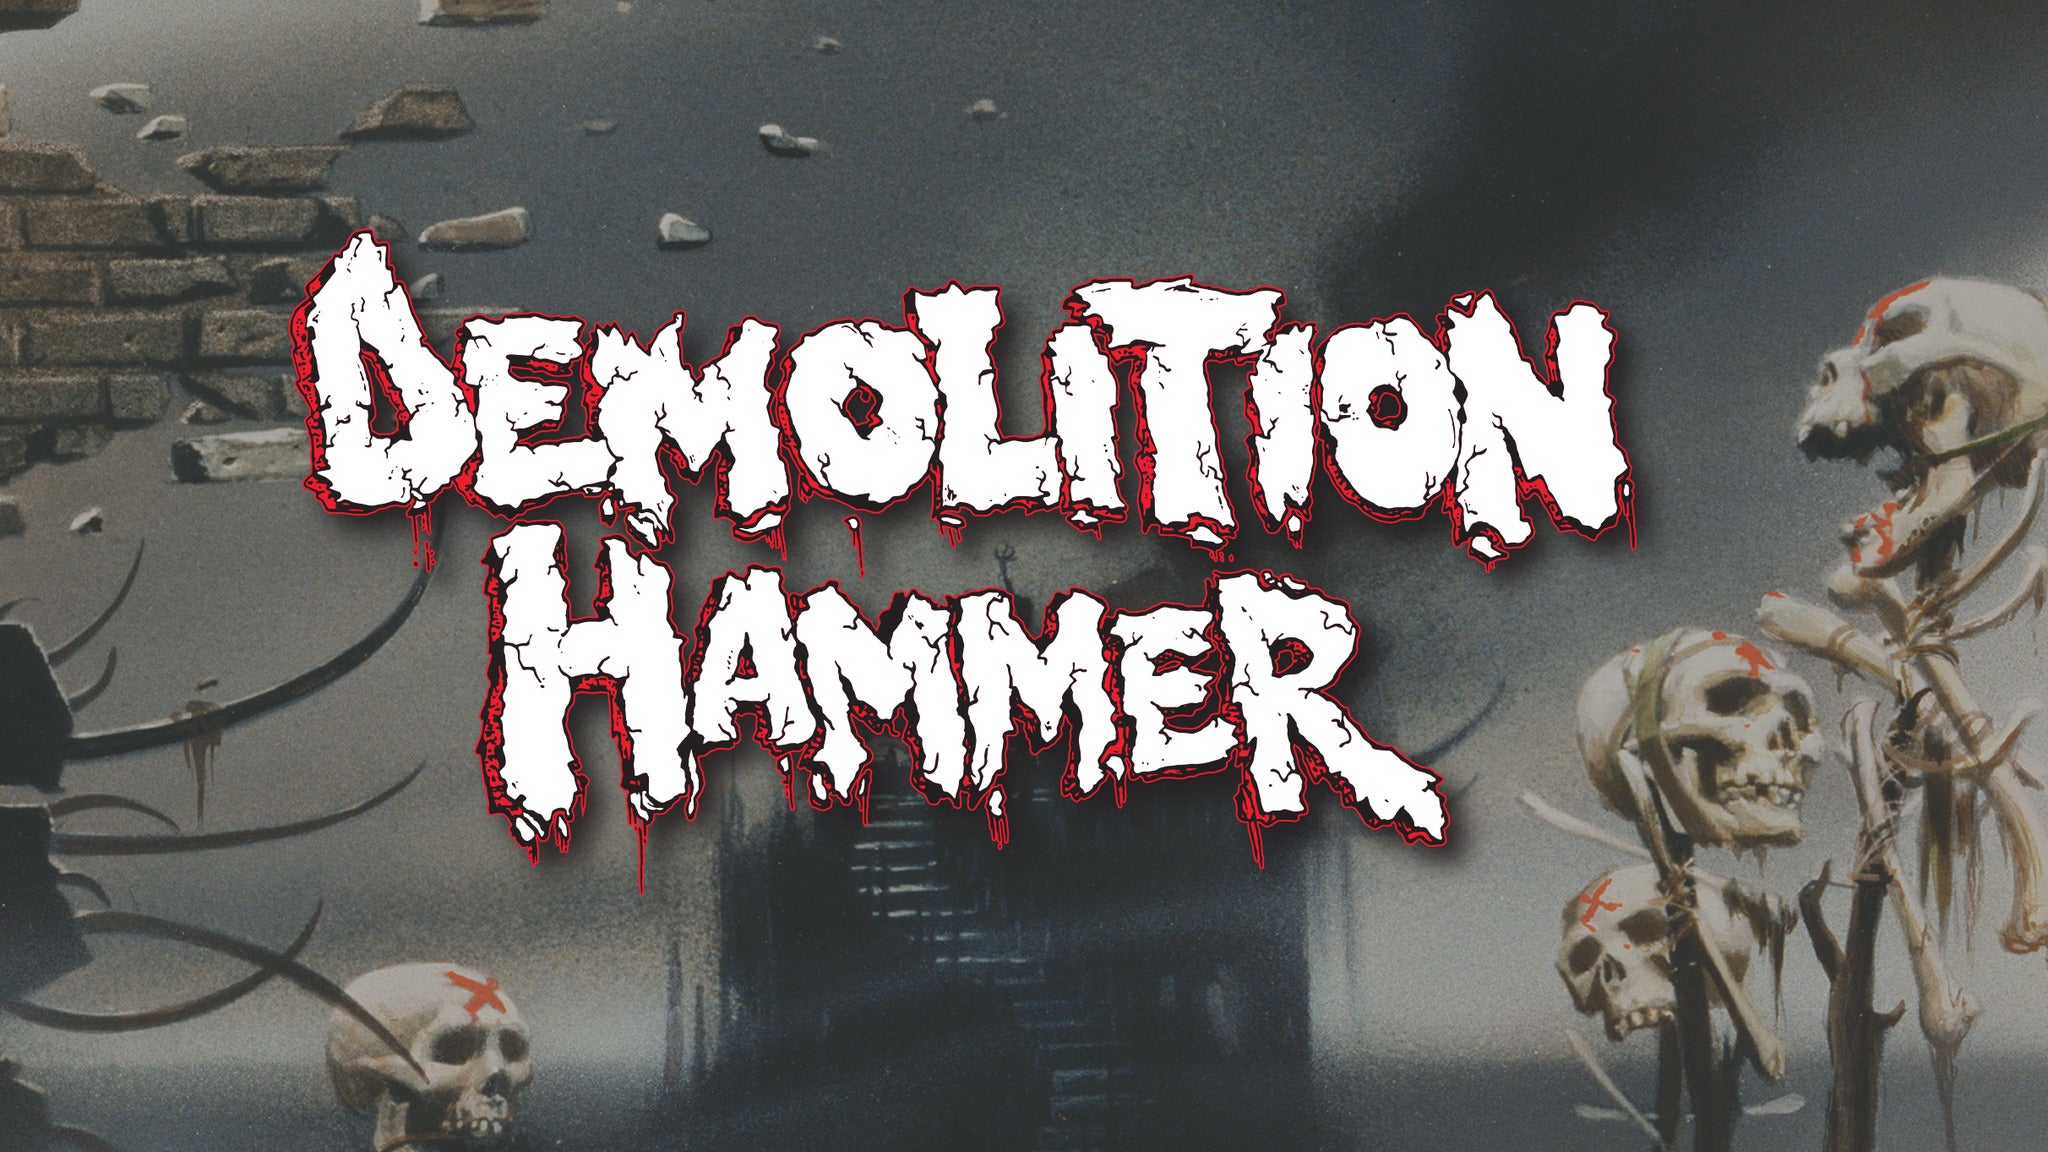 Demolition Hammer in New York promo photo for Citi® Cardmember Preferred presale offer code